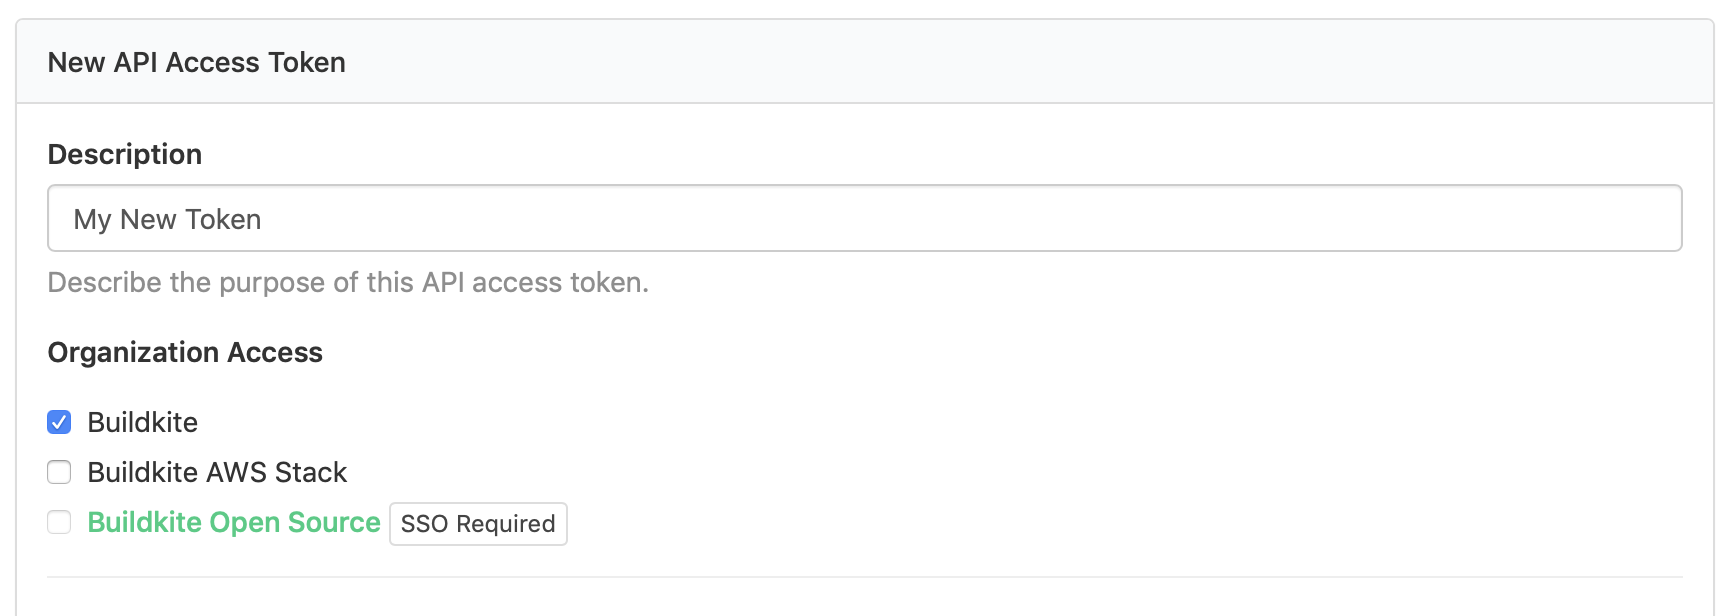 Screenshot of the New API Access Token form